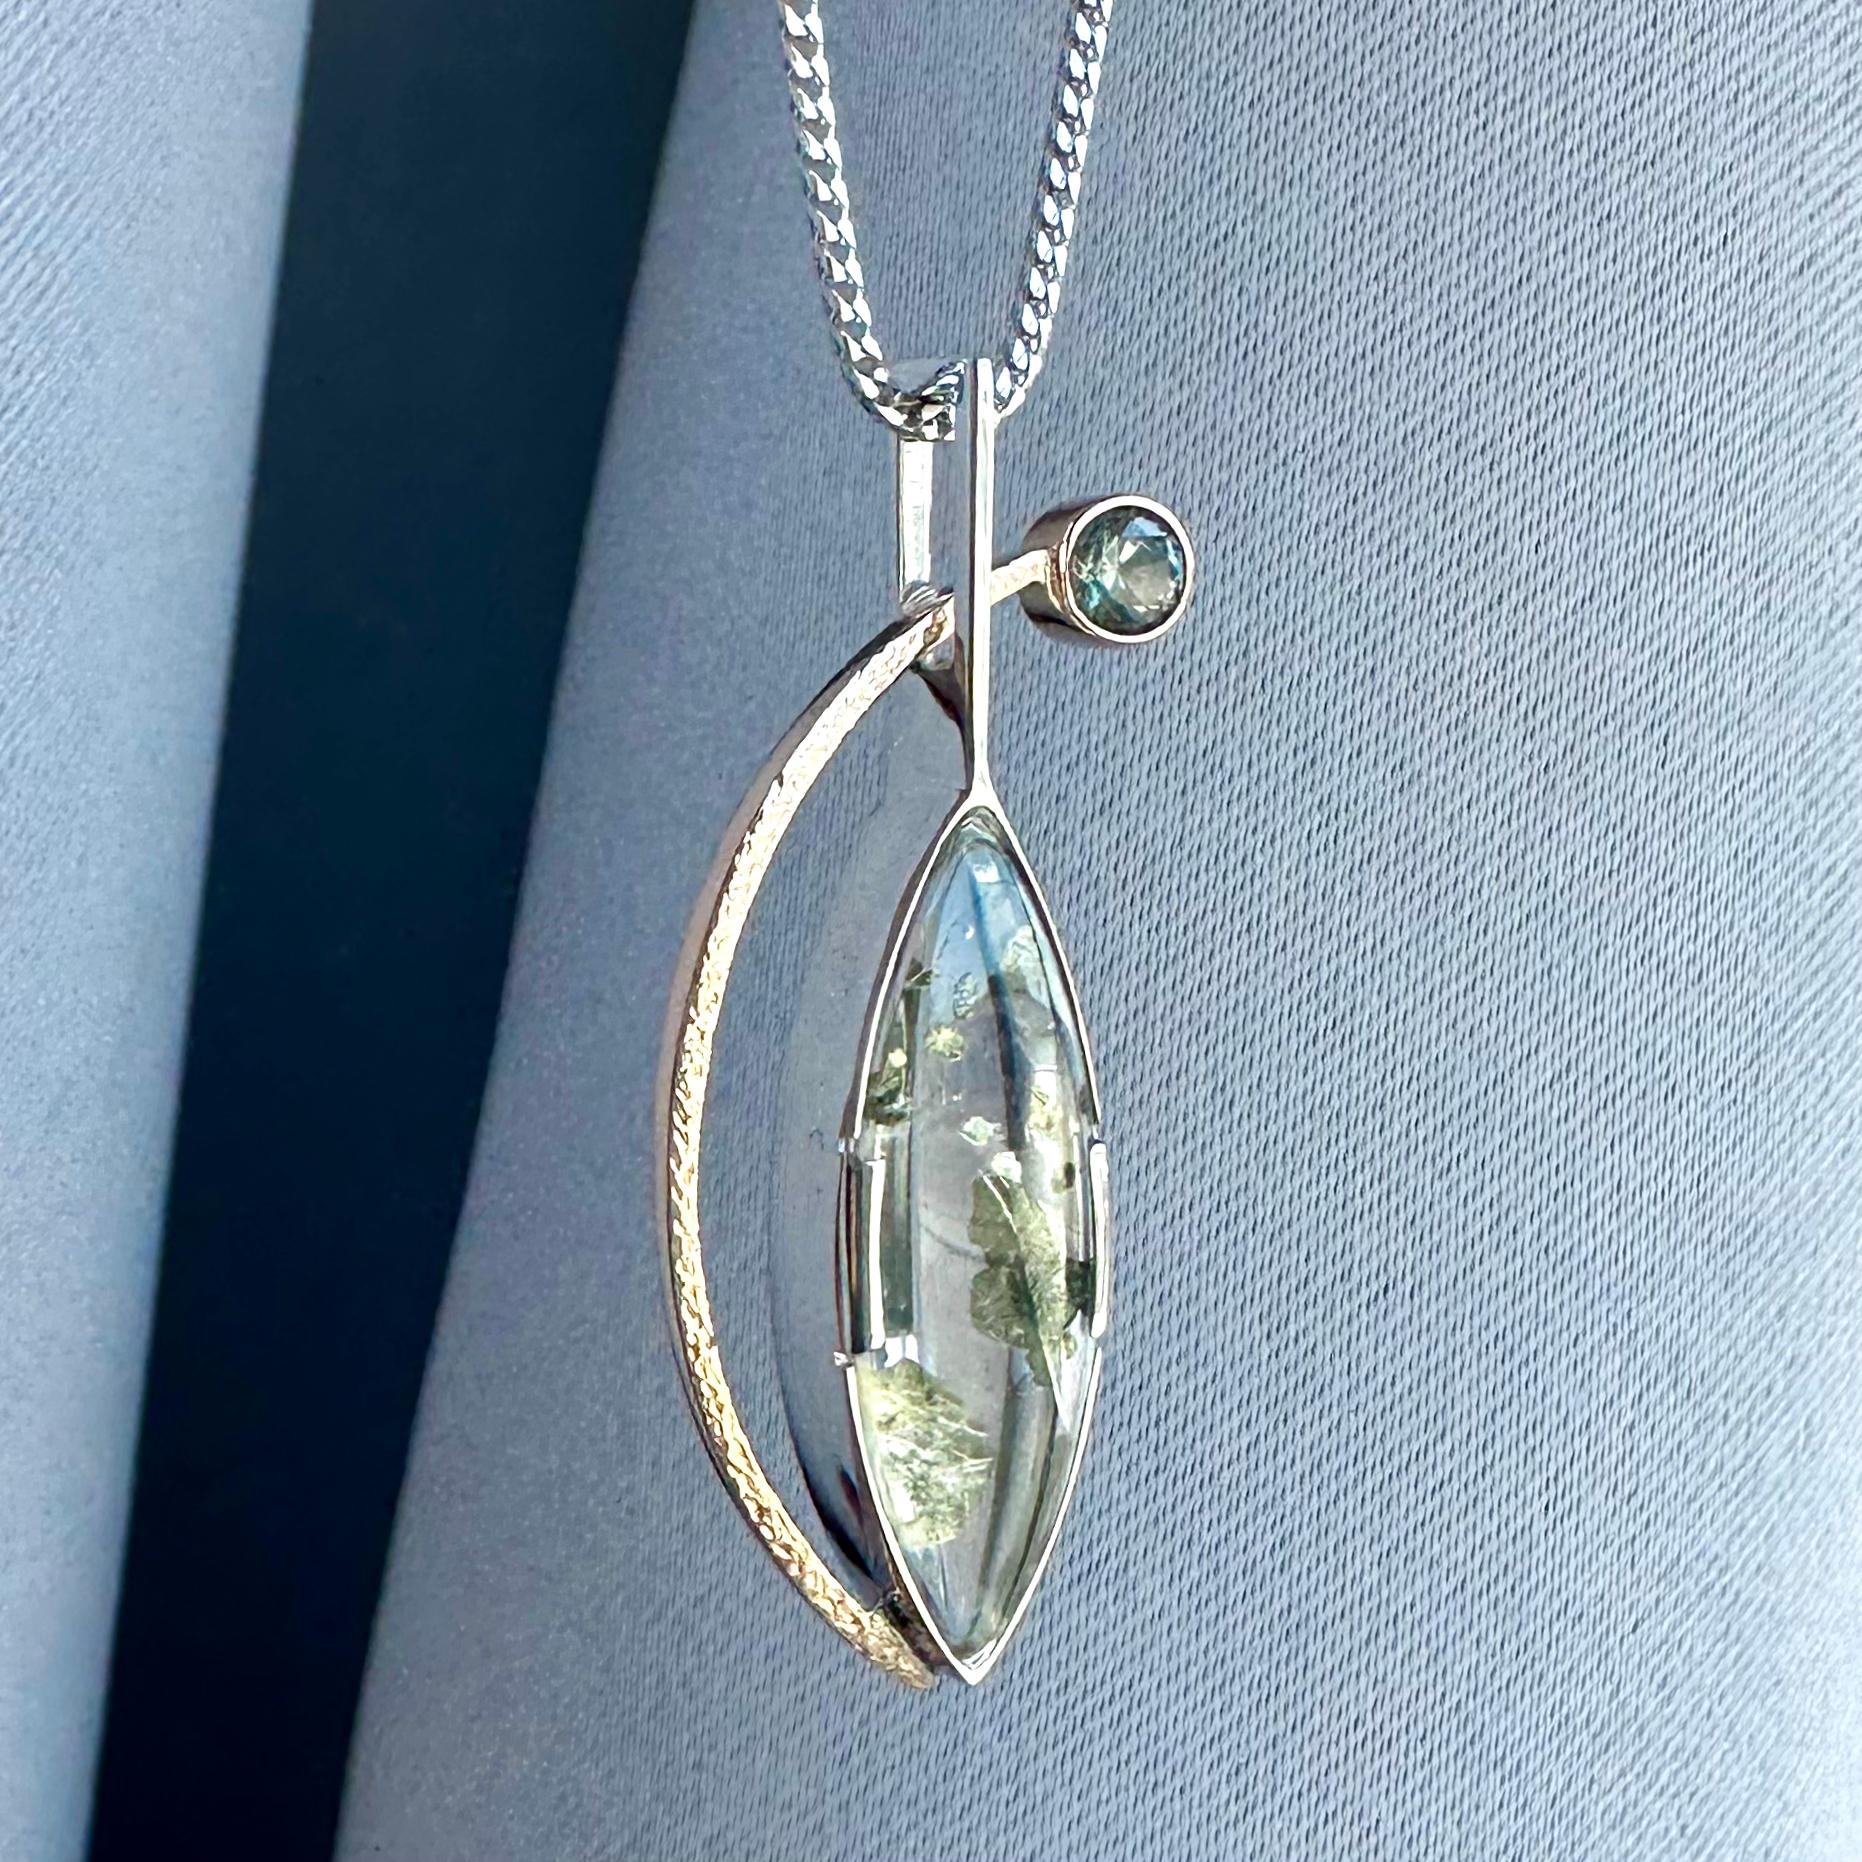 Marquise Cut Pendant 9.98 ct pyrite-in-quartz, Montana Sapphire, 14k/18k G&G Original Design For Sale